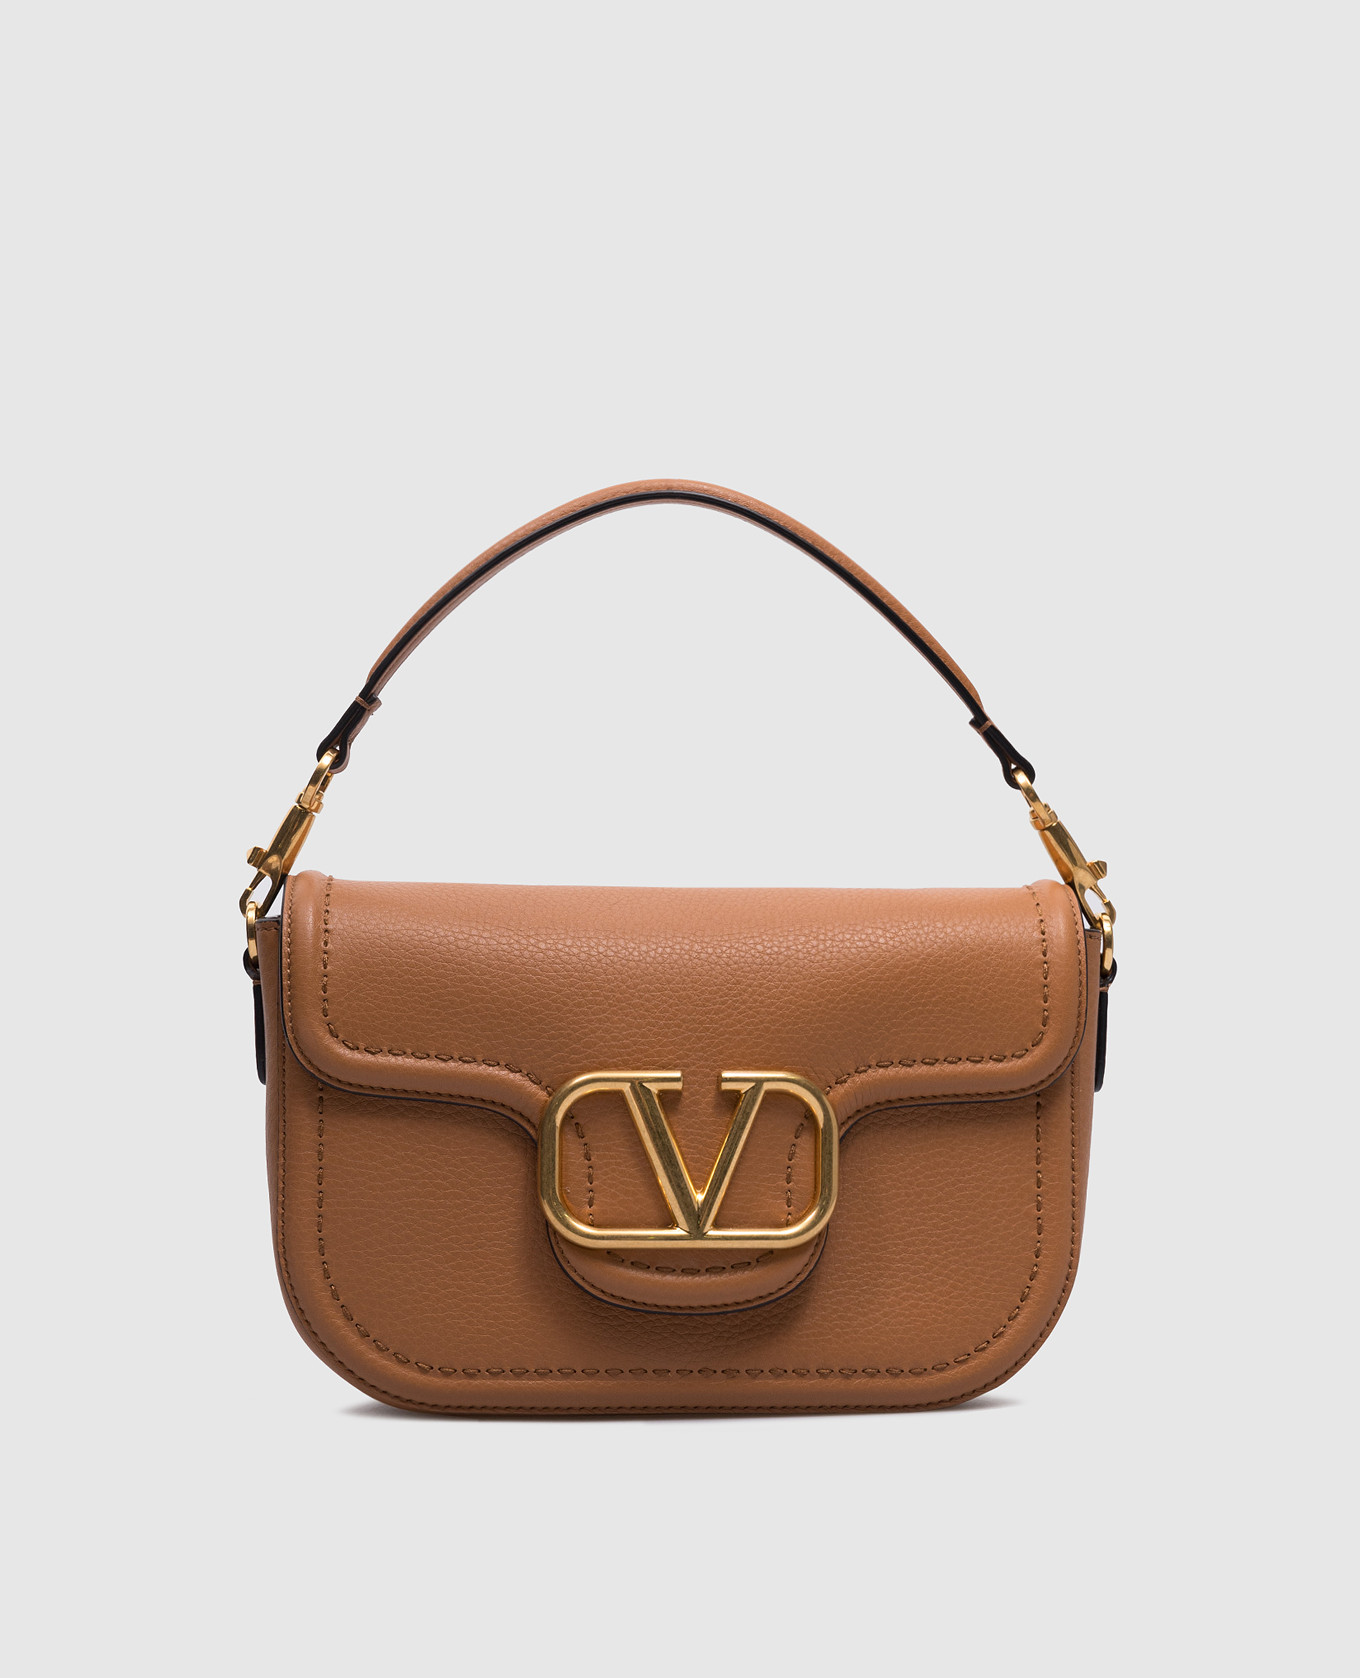 Alltime brown leather messenger bag with metallic VLogo Signature logo